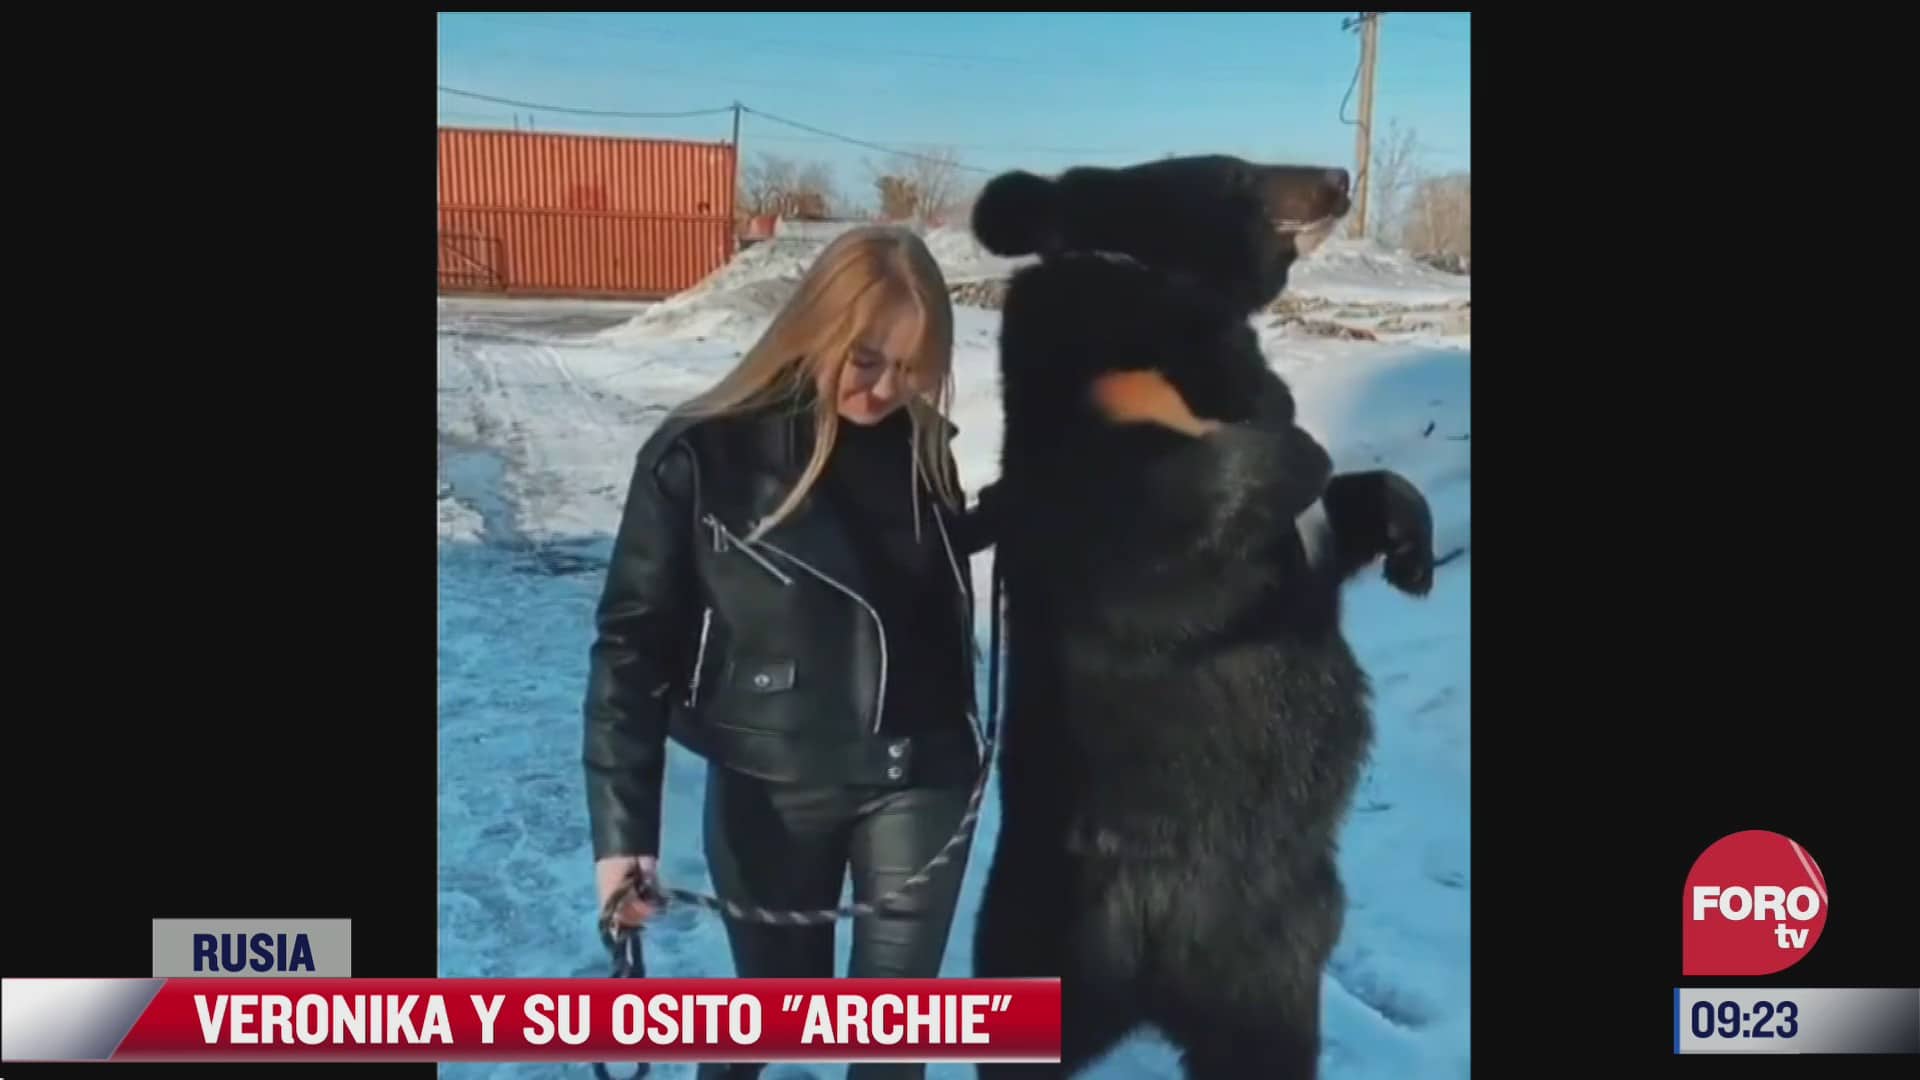 mujer rescata a oso de zoologico ahora son inseparables